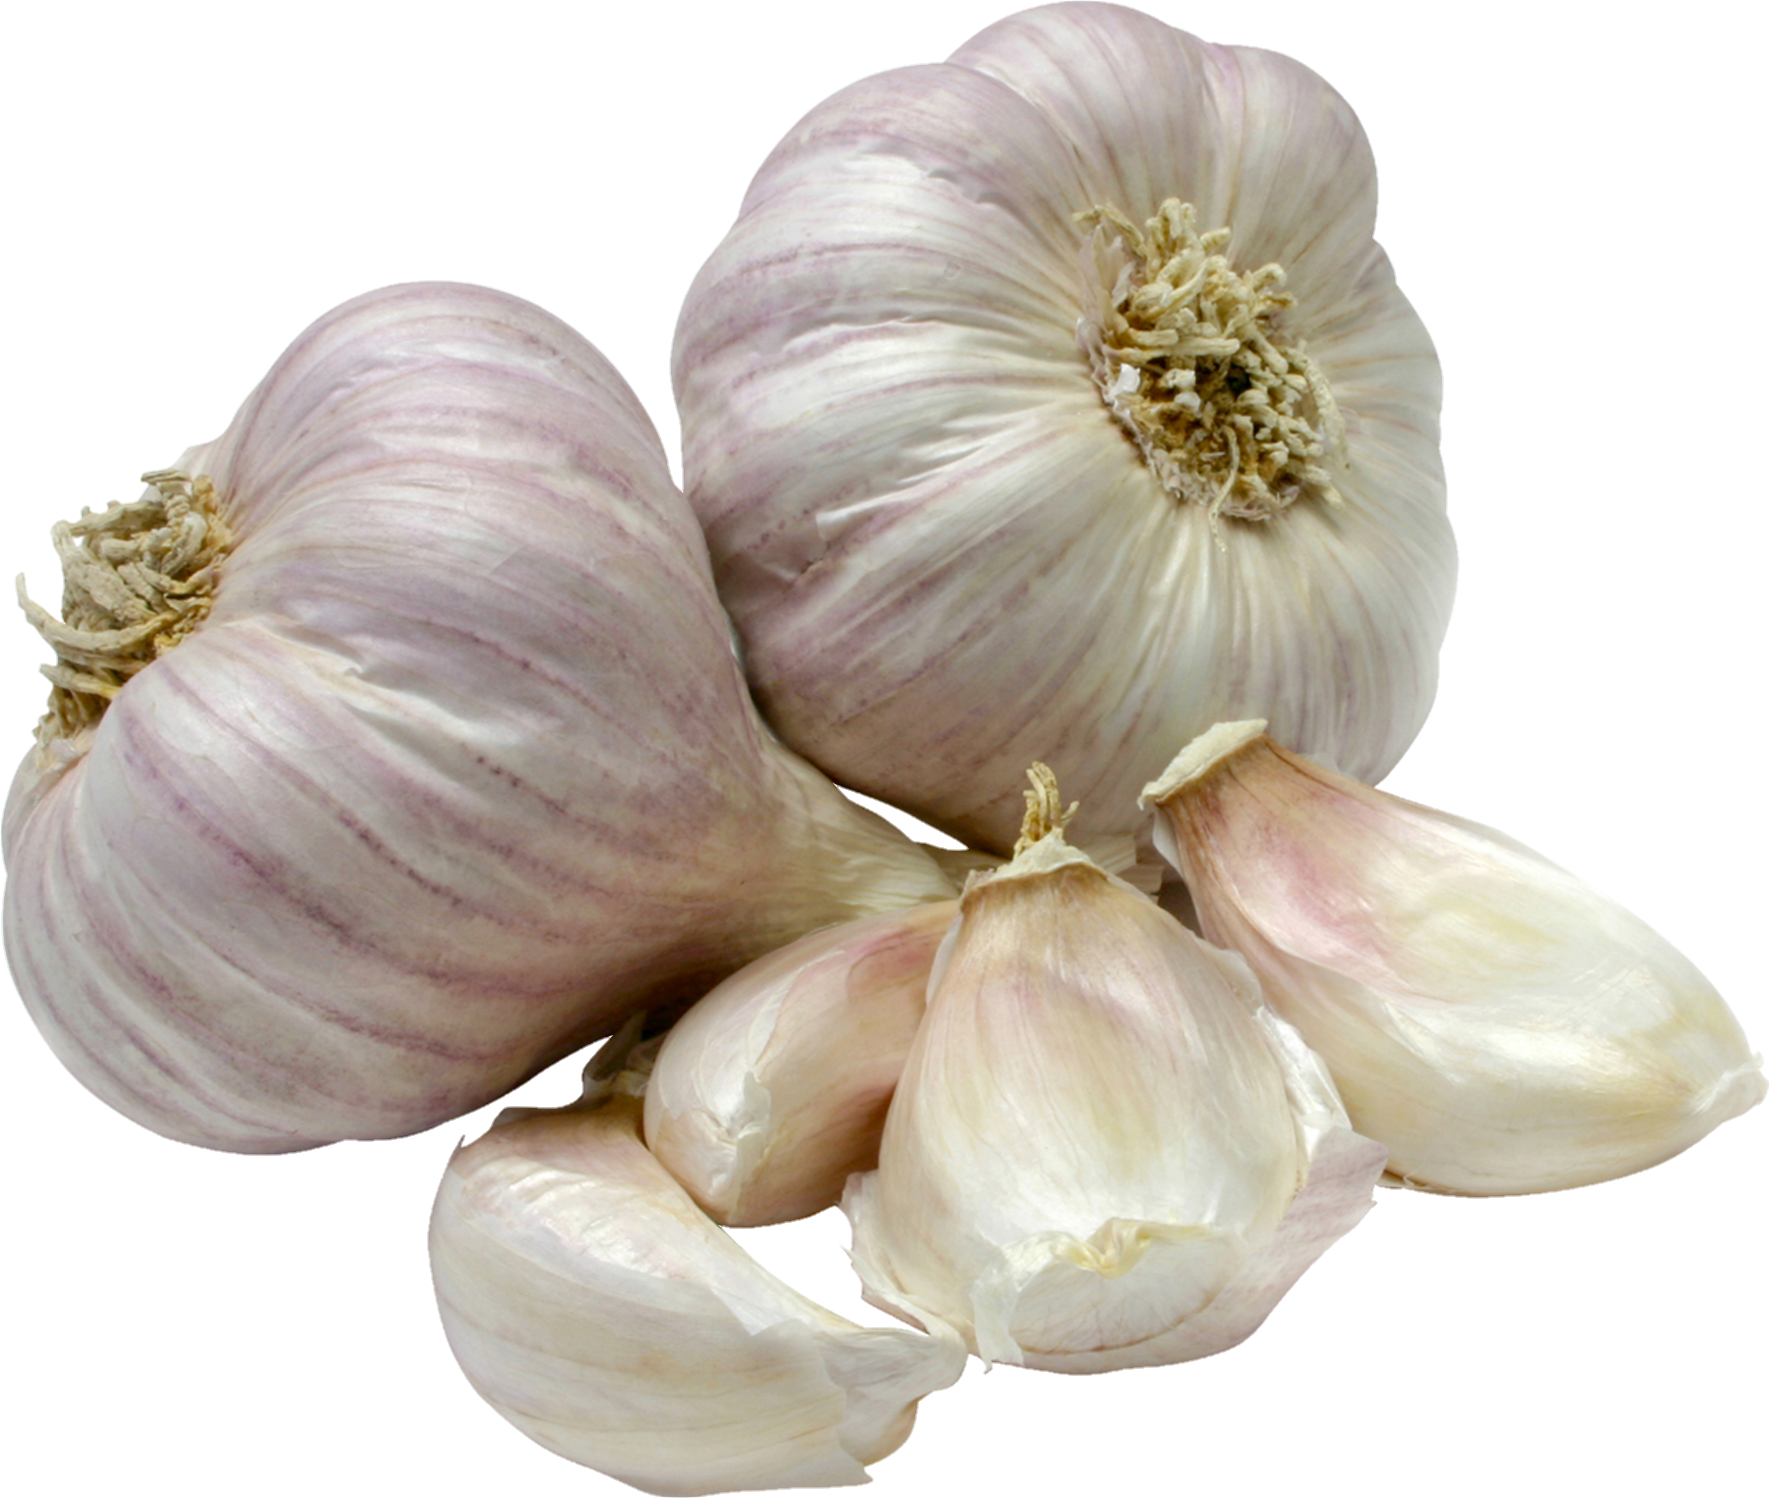 Garlic-2